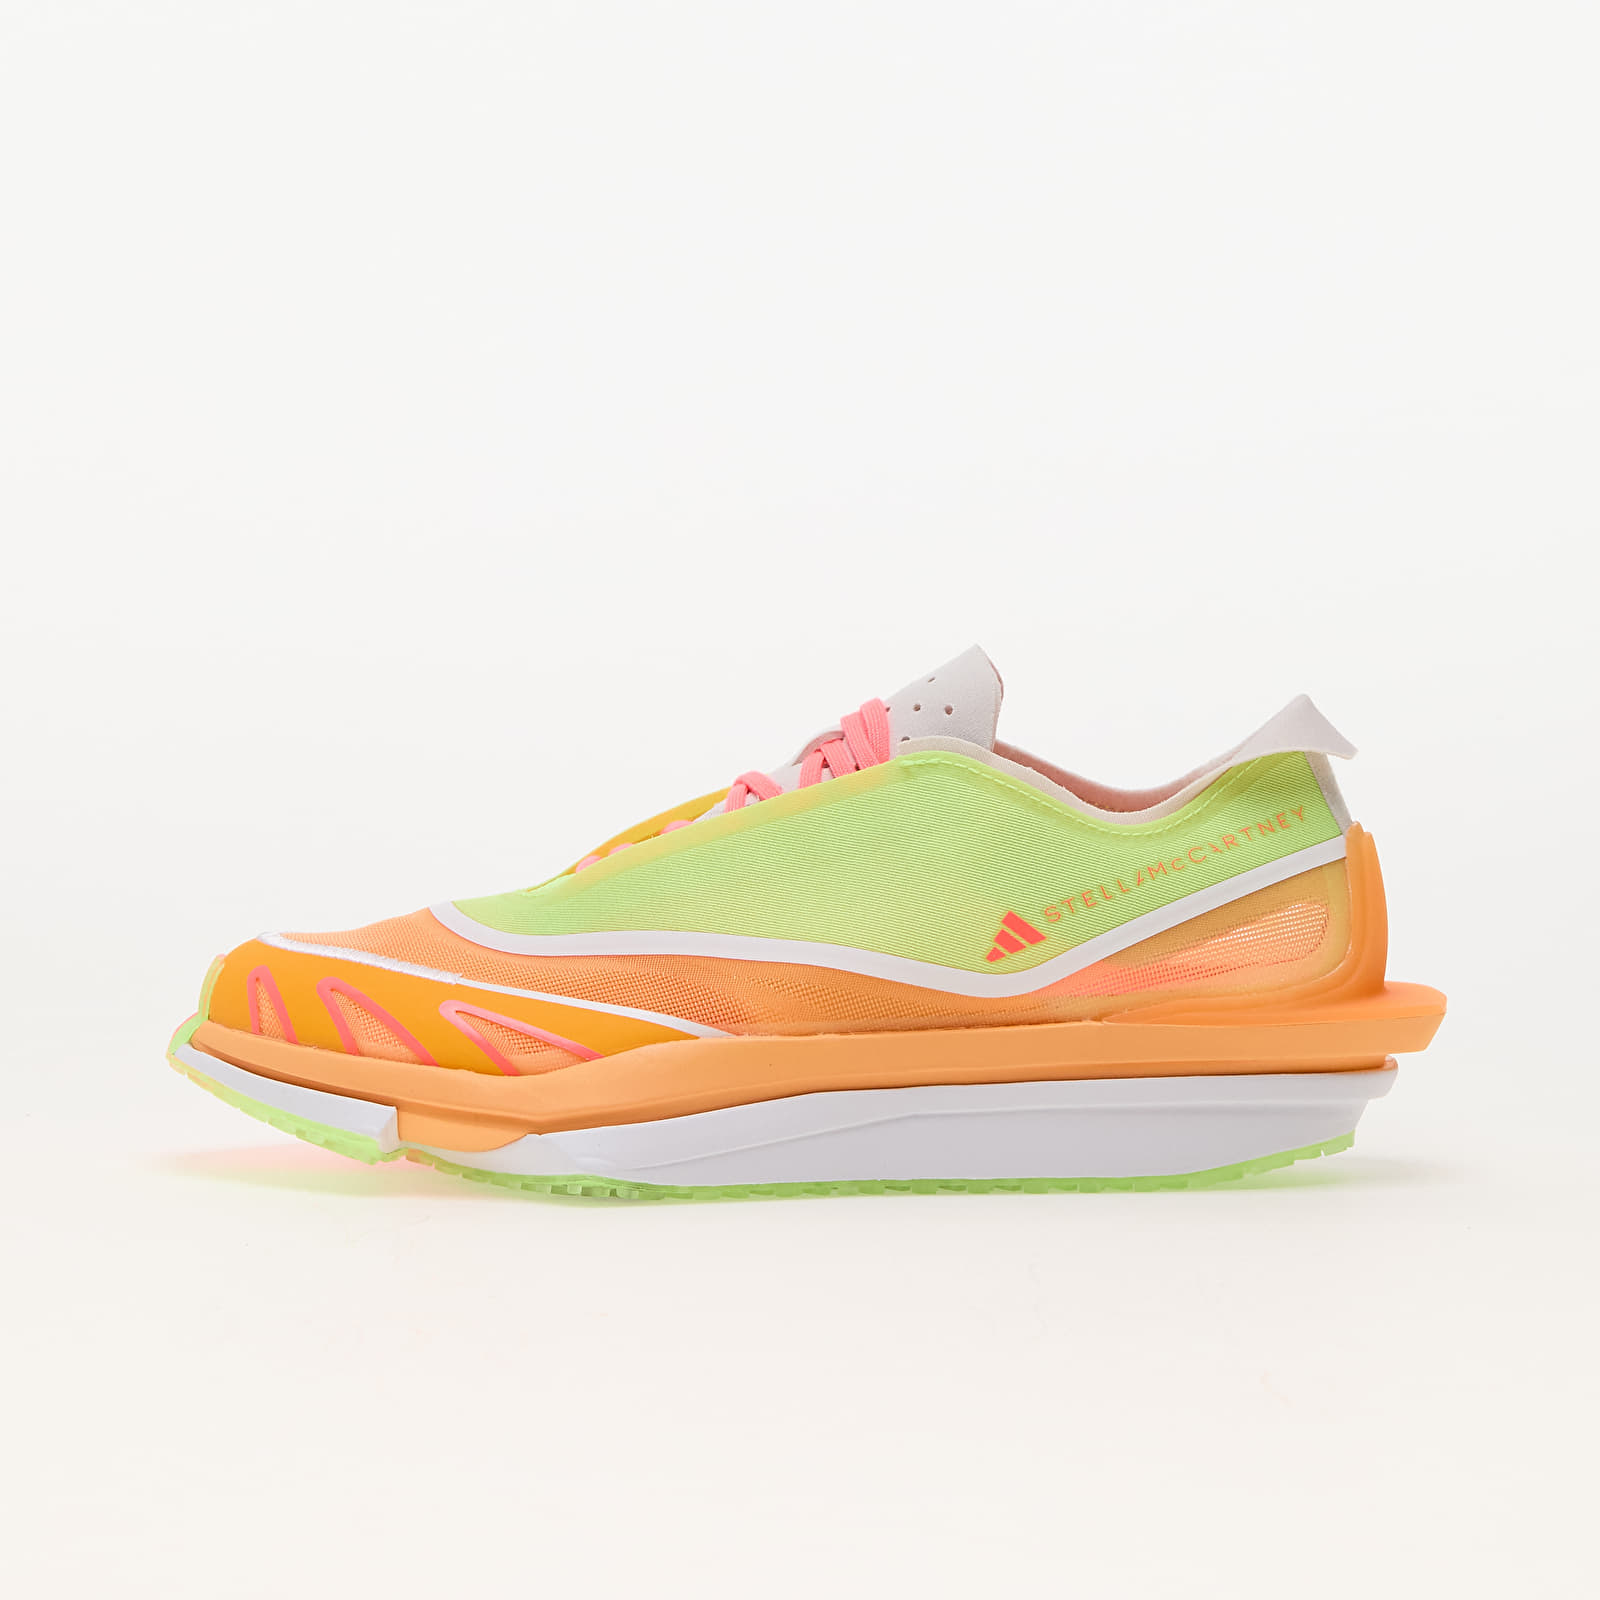 Baskets et chaussures pour femmes adidas x Stella McCartney Earthlight 2.0 SIGGNR/ Hazy Orange/ White